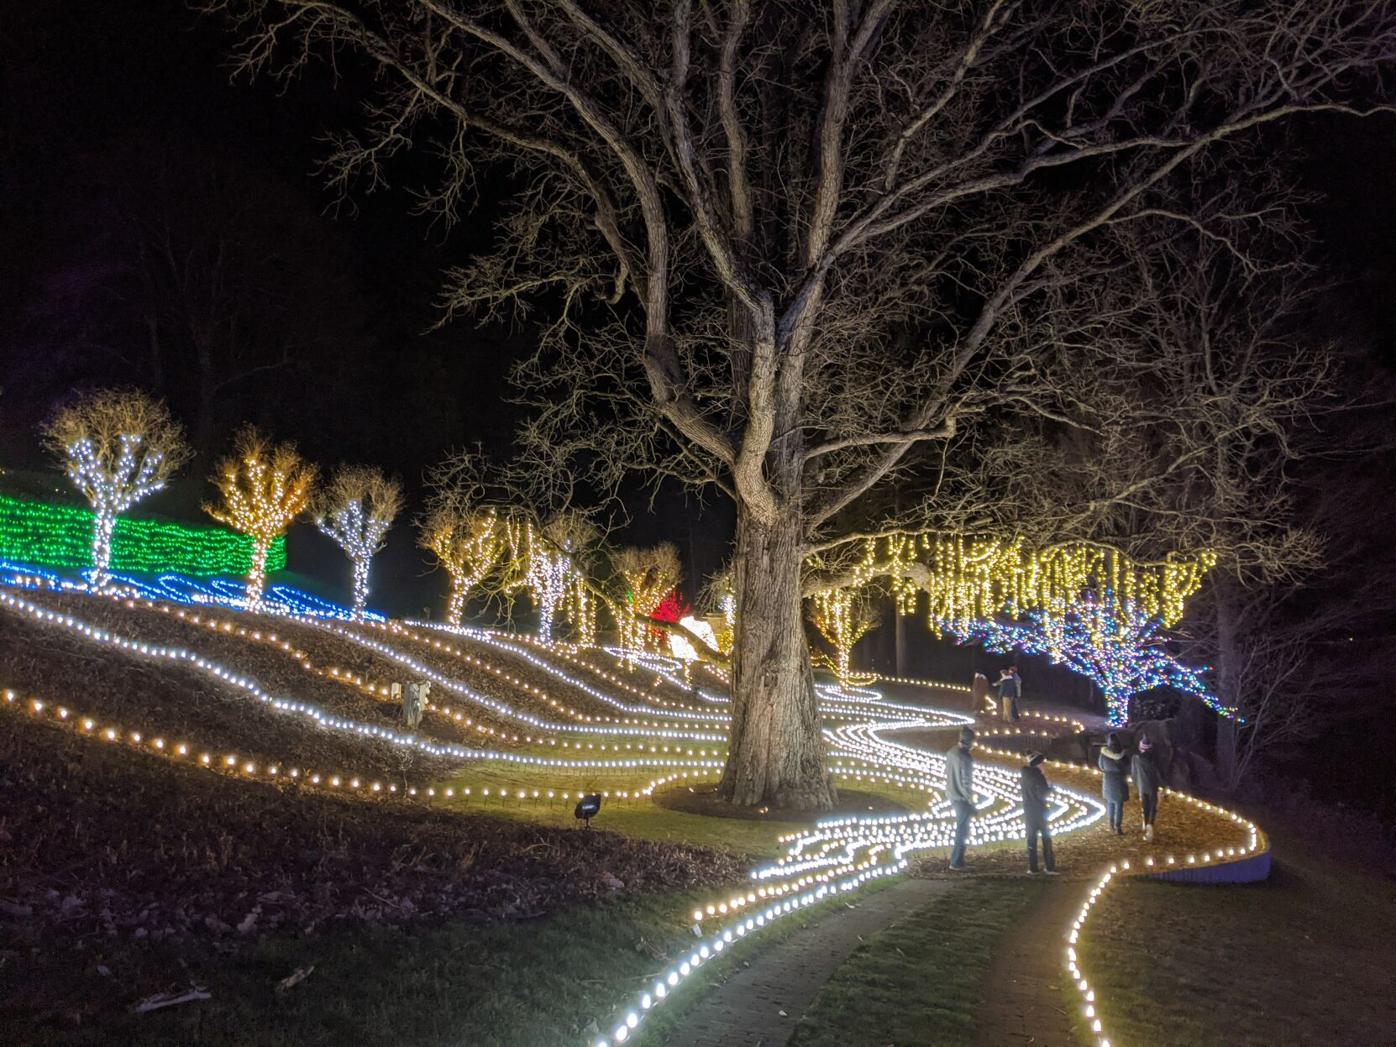 Winterlights brightens winter nights at Naumkeag Arts And Culture